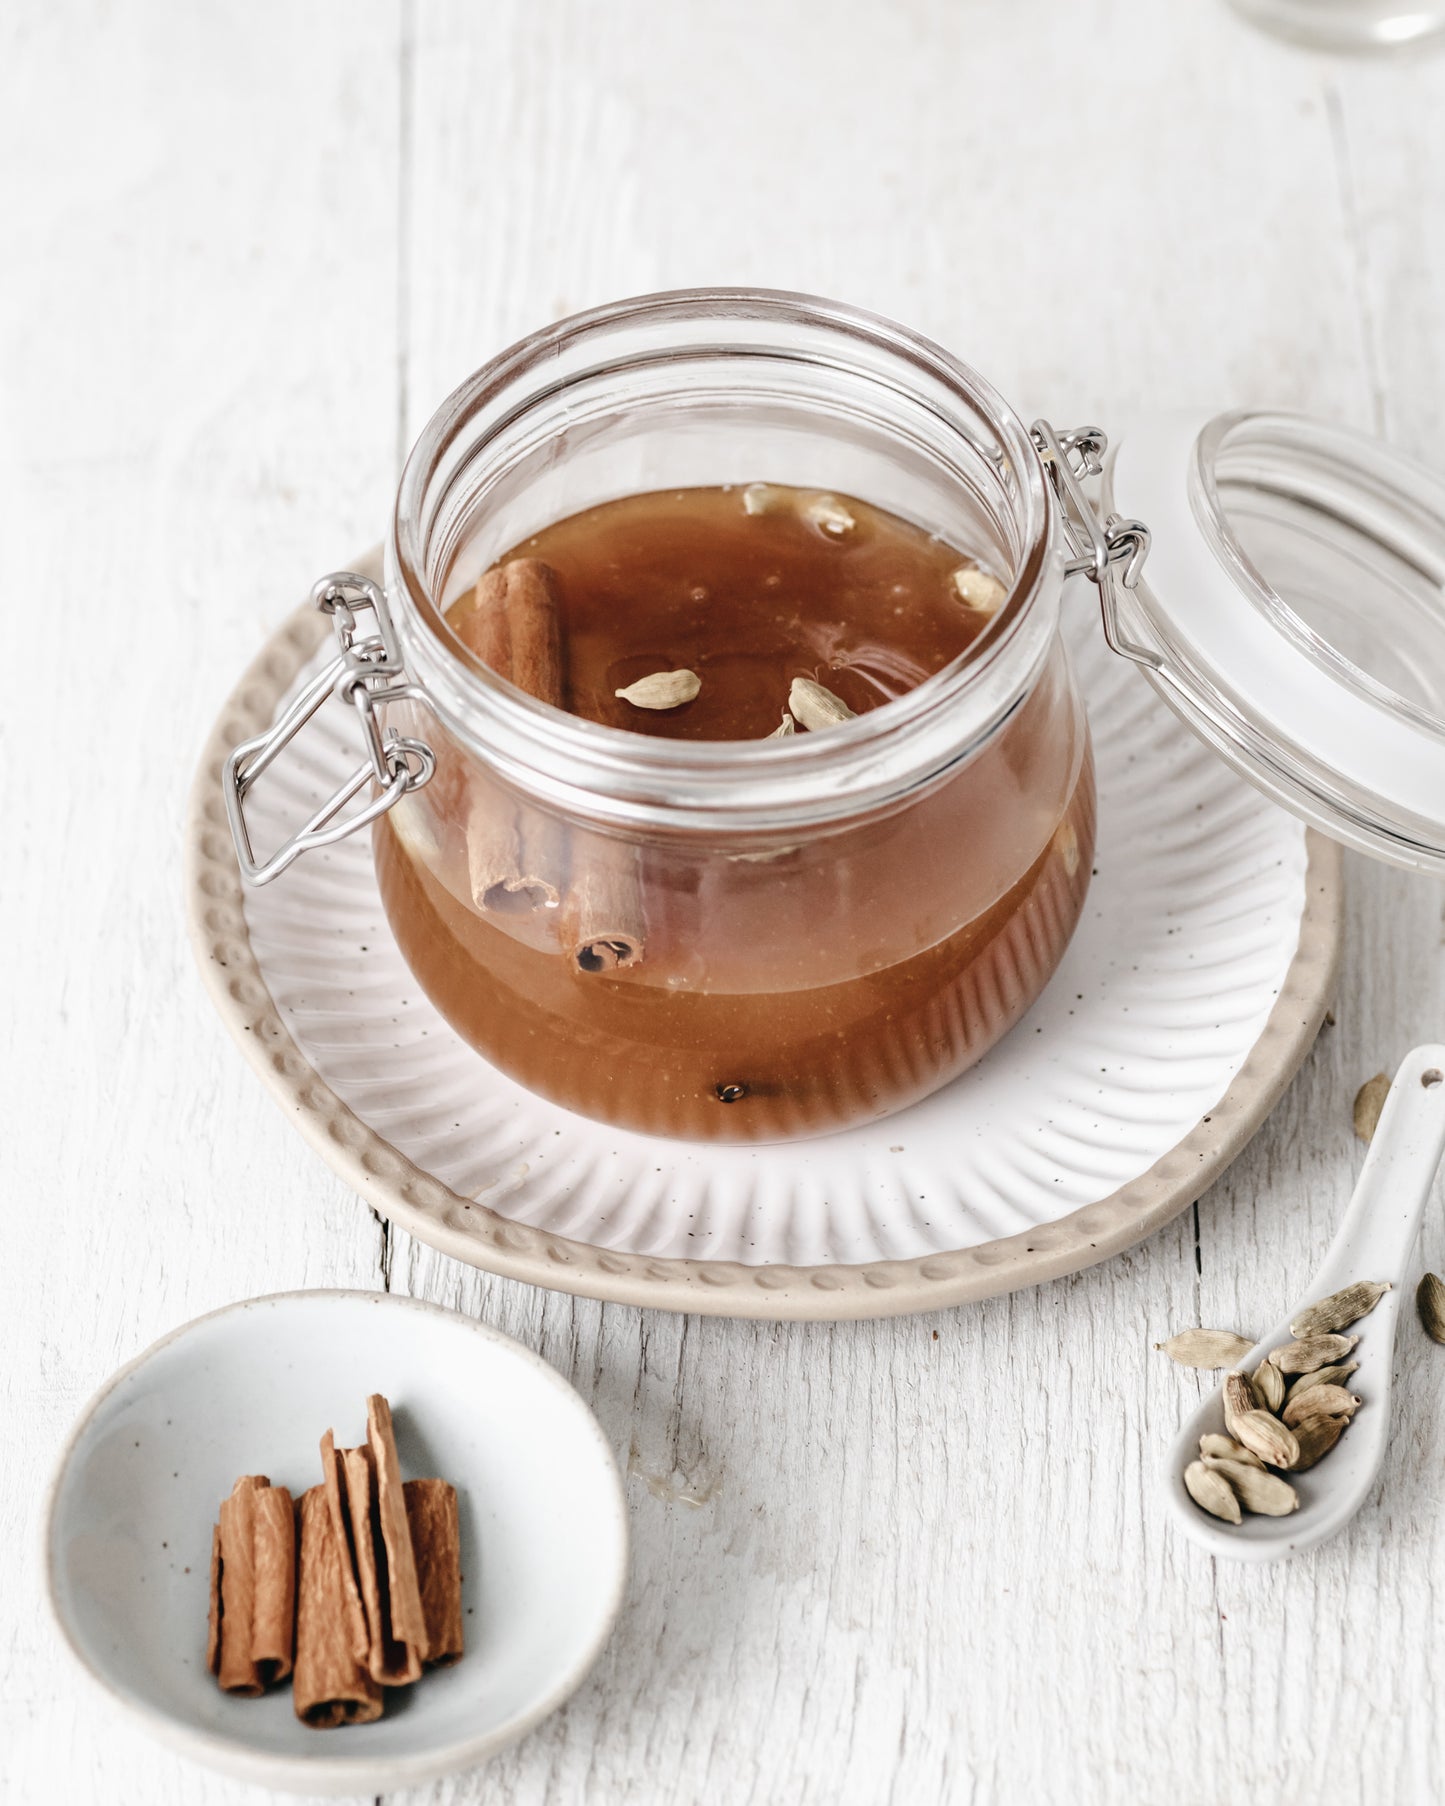 5 ways you can enjoy manuka honey and take advantage of its health benefits